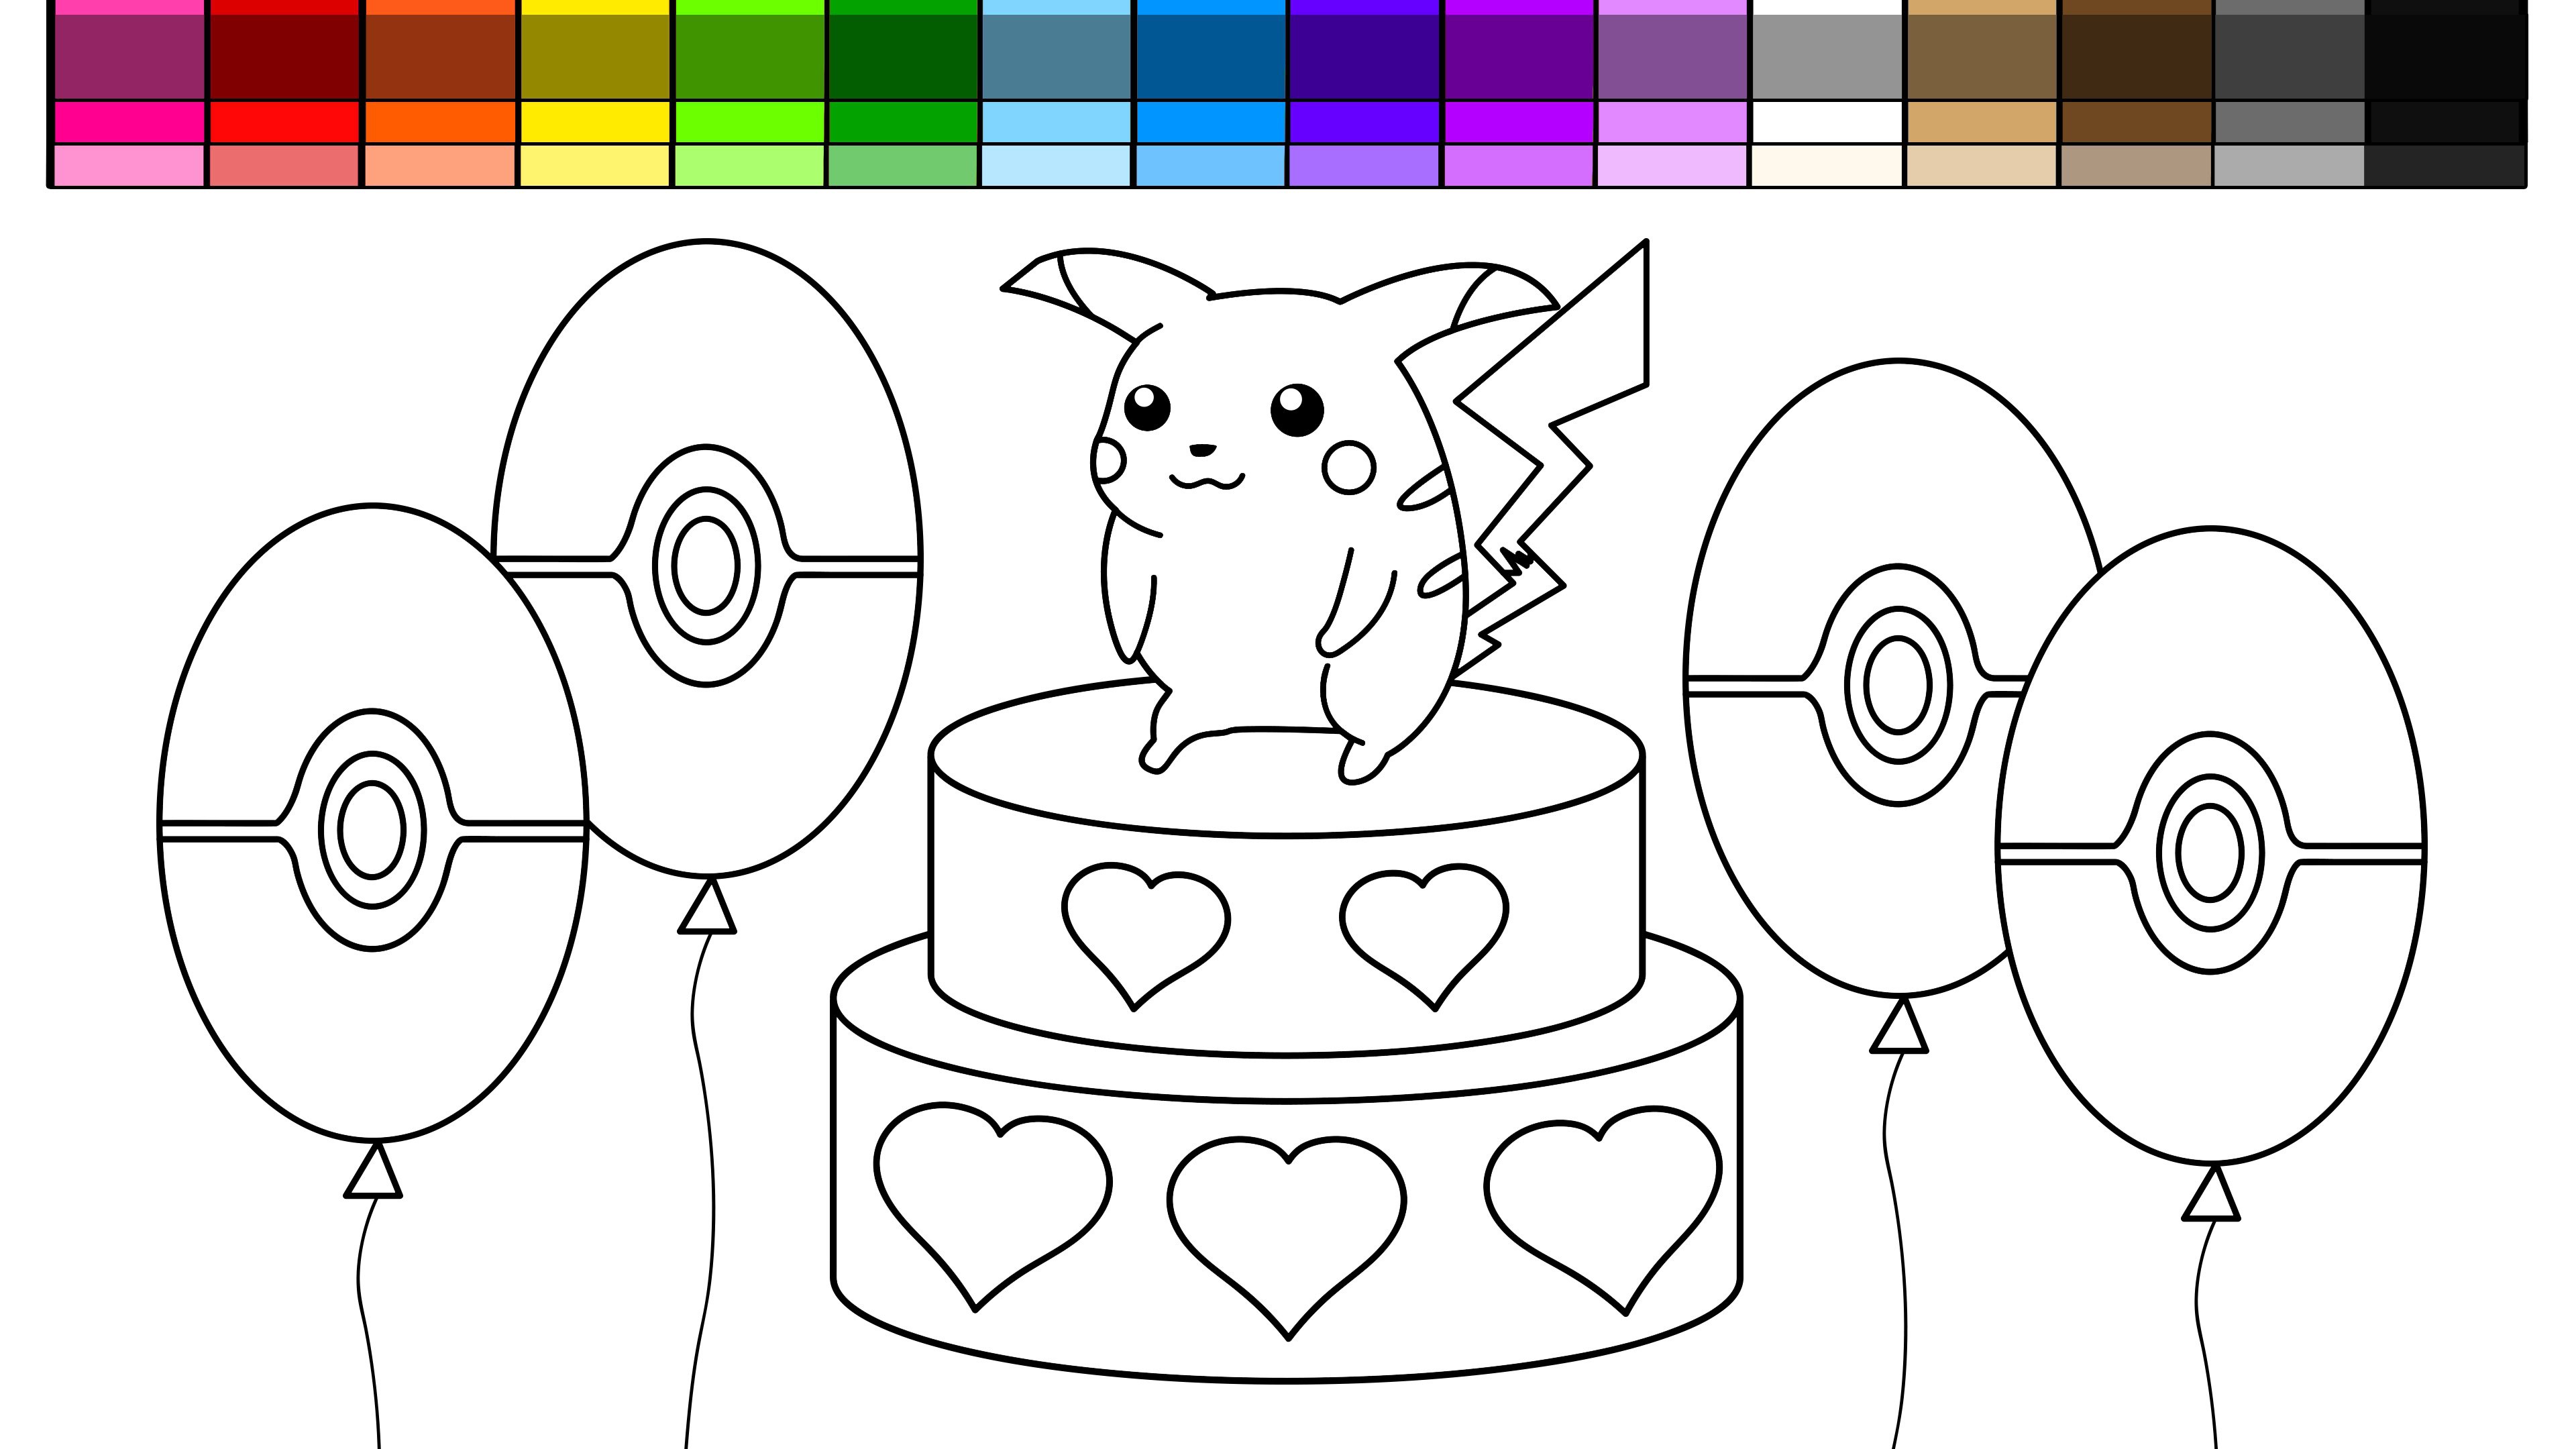 pikachu-heart-coloring-page-of-pikachu-heart-coloring-page Pikachu Heart Coloring Page Cartoon 